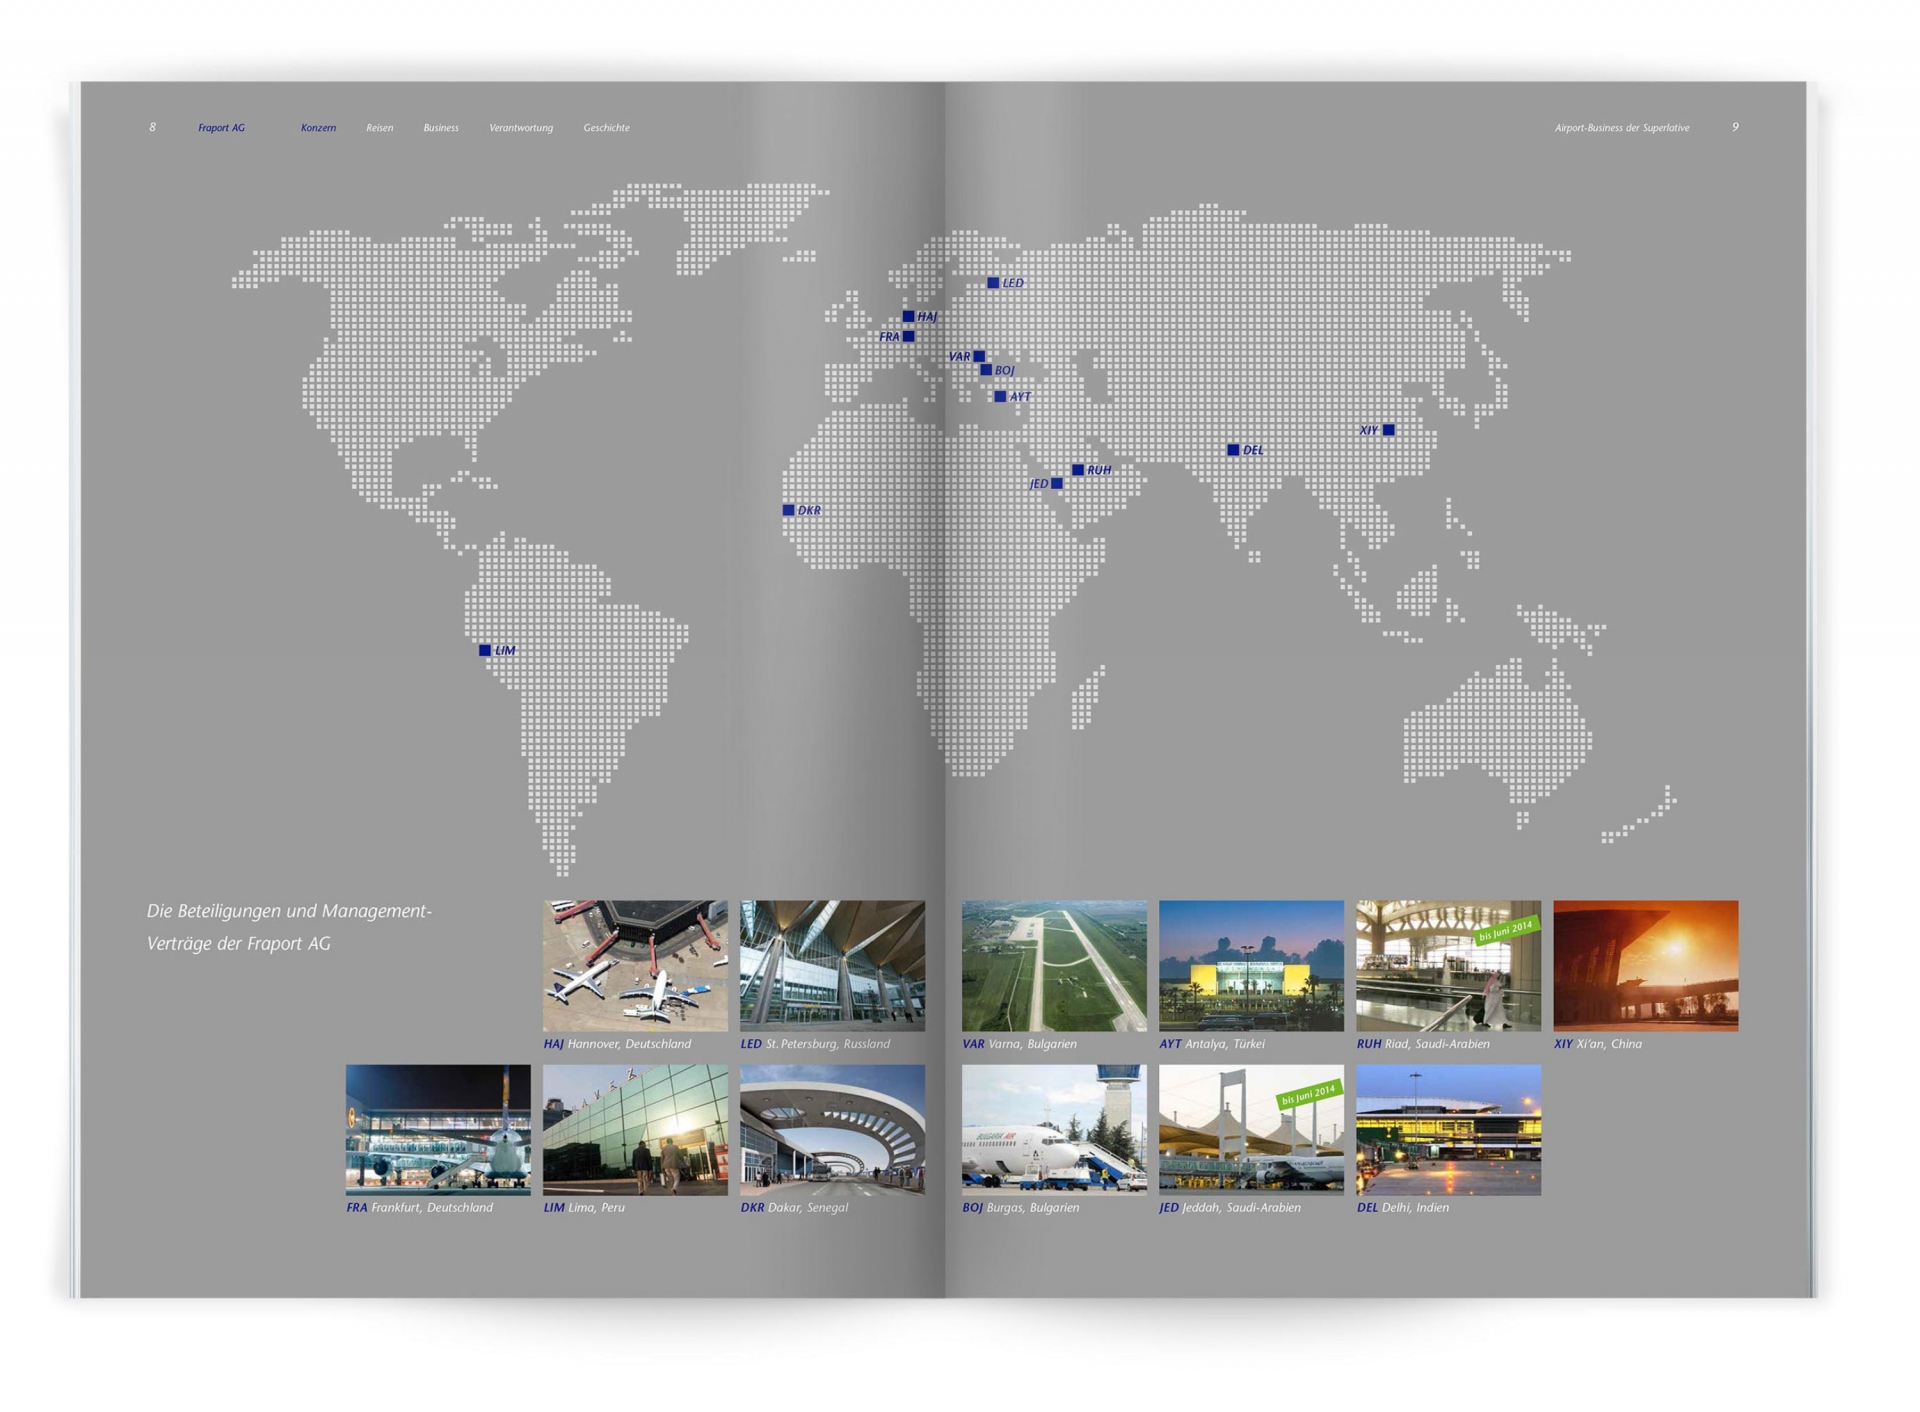 Fraport Imagebroschüre DoppelseiteBroschürengestaltung: Imagebroschüre Fraport AG - Doppelseite mit Karten-Illustration 